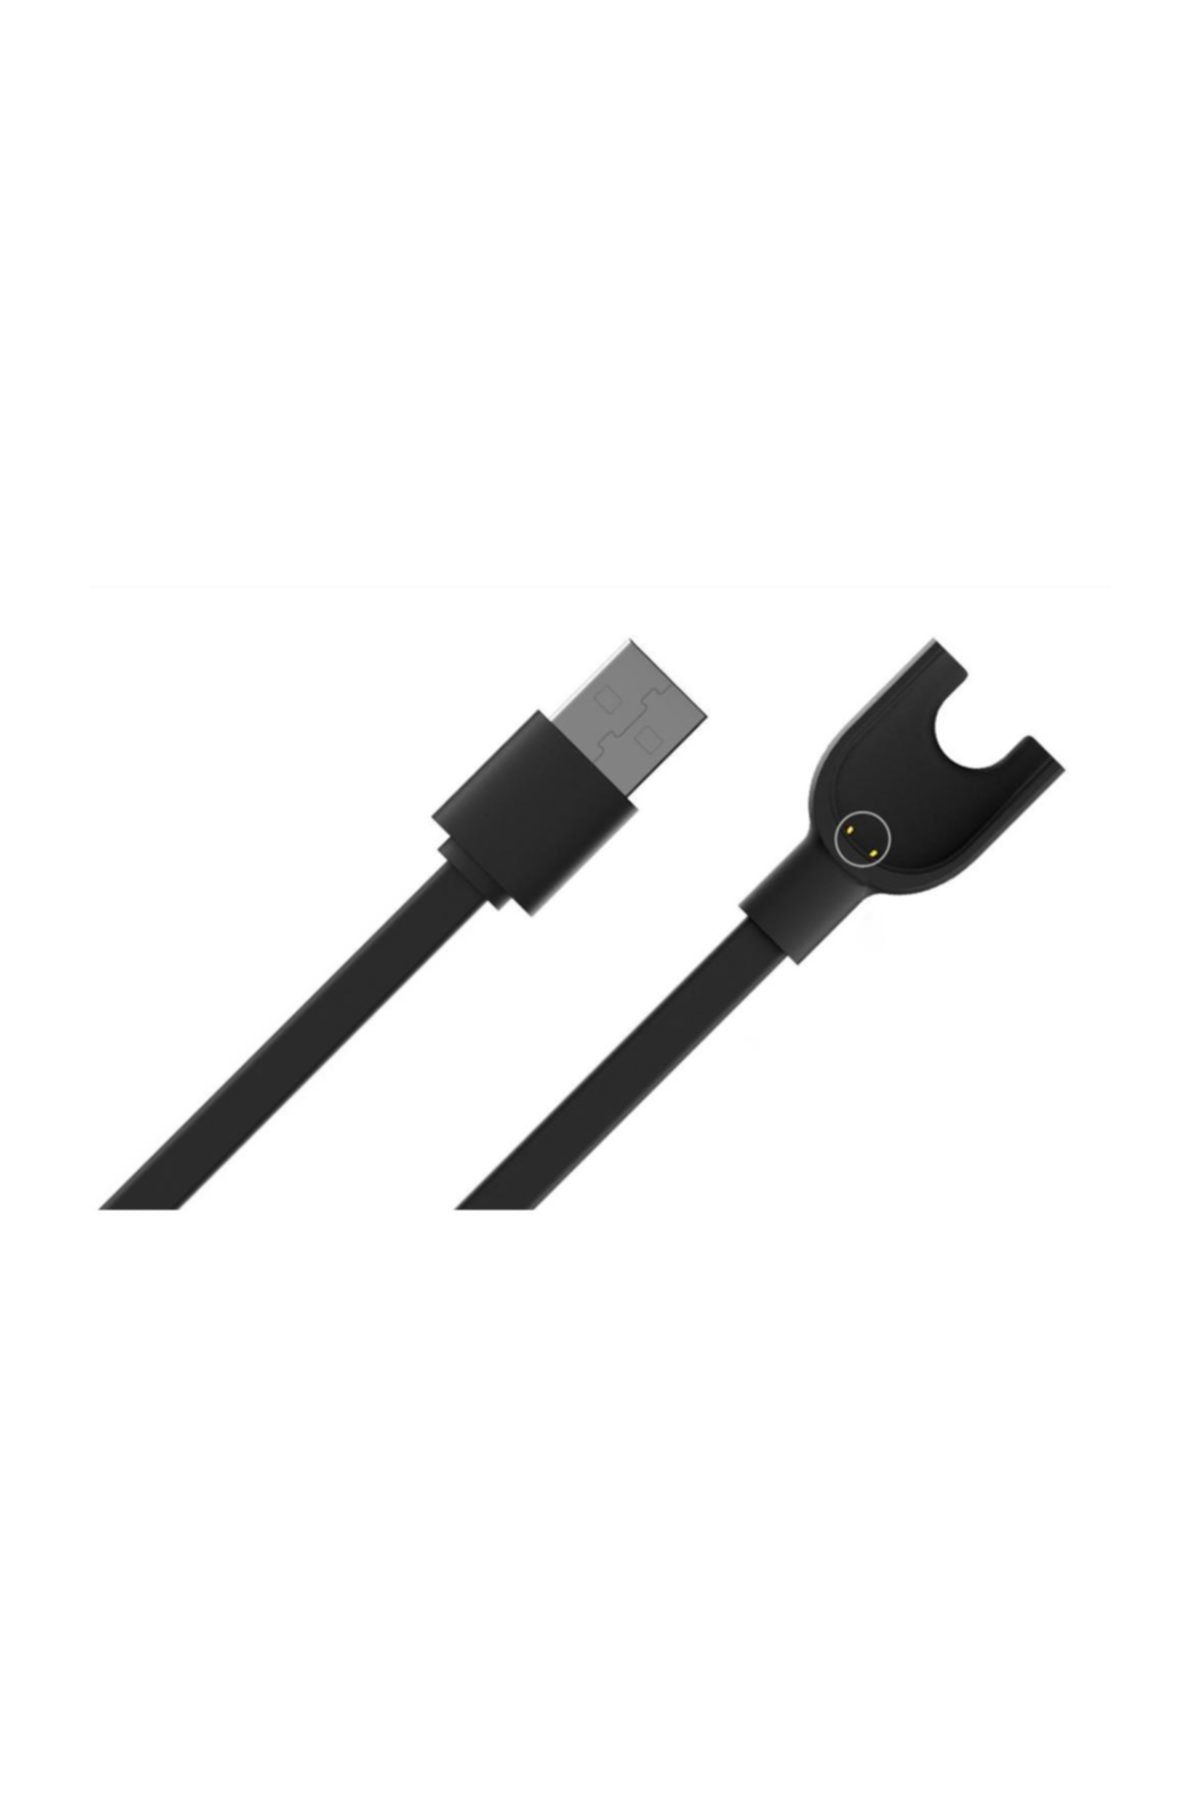 Marbil Bilişim Mi Band Uyumlu 3 Yedek USB Şarj Kablosu